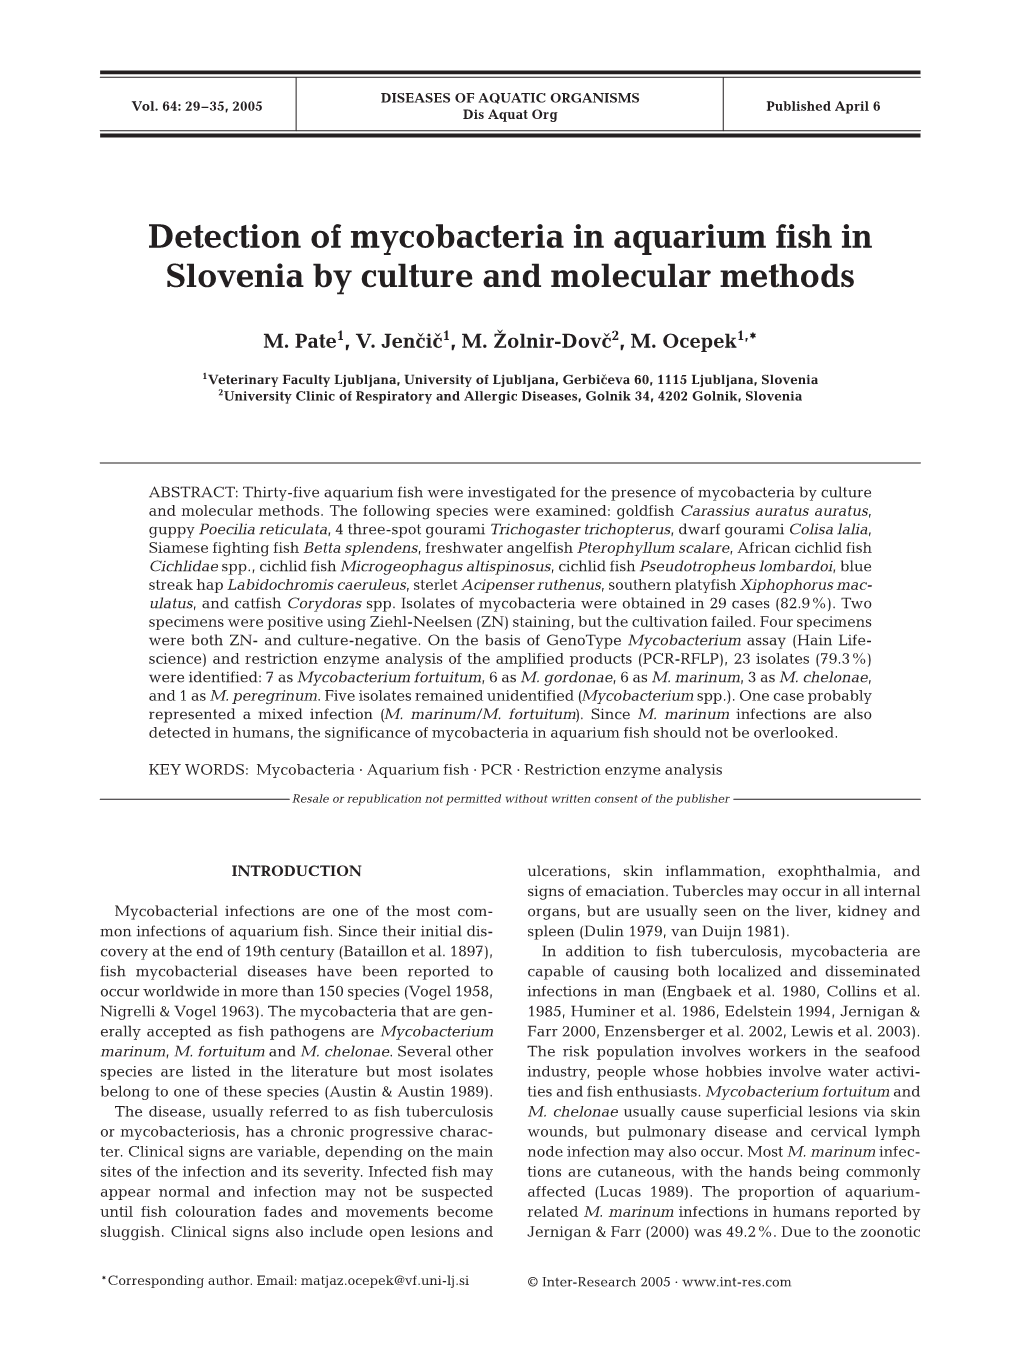 Detection of Mycobacteria in Aquarium Fish in Slovenia by Culture and Molecular Methods